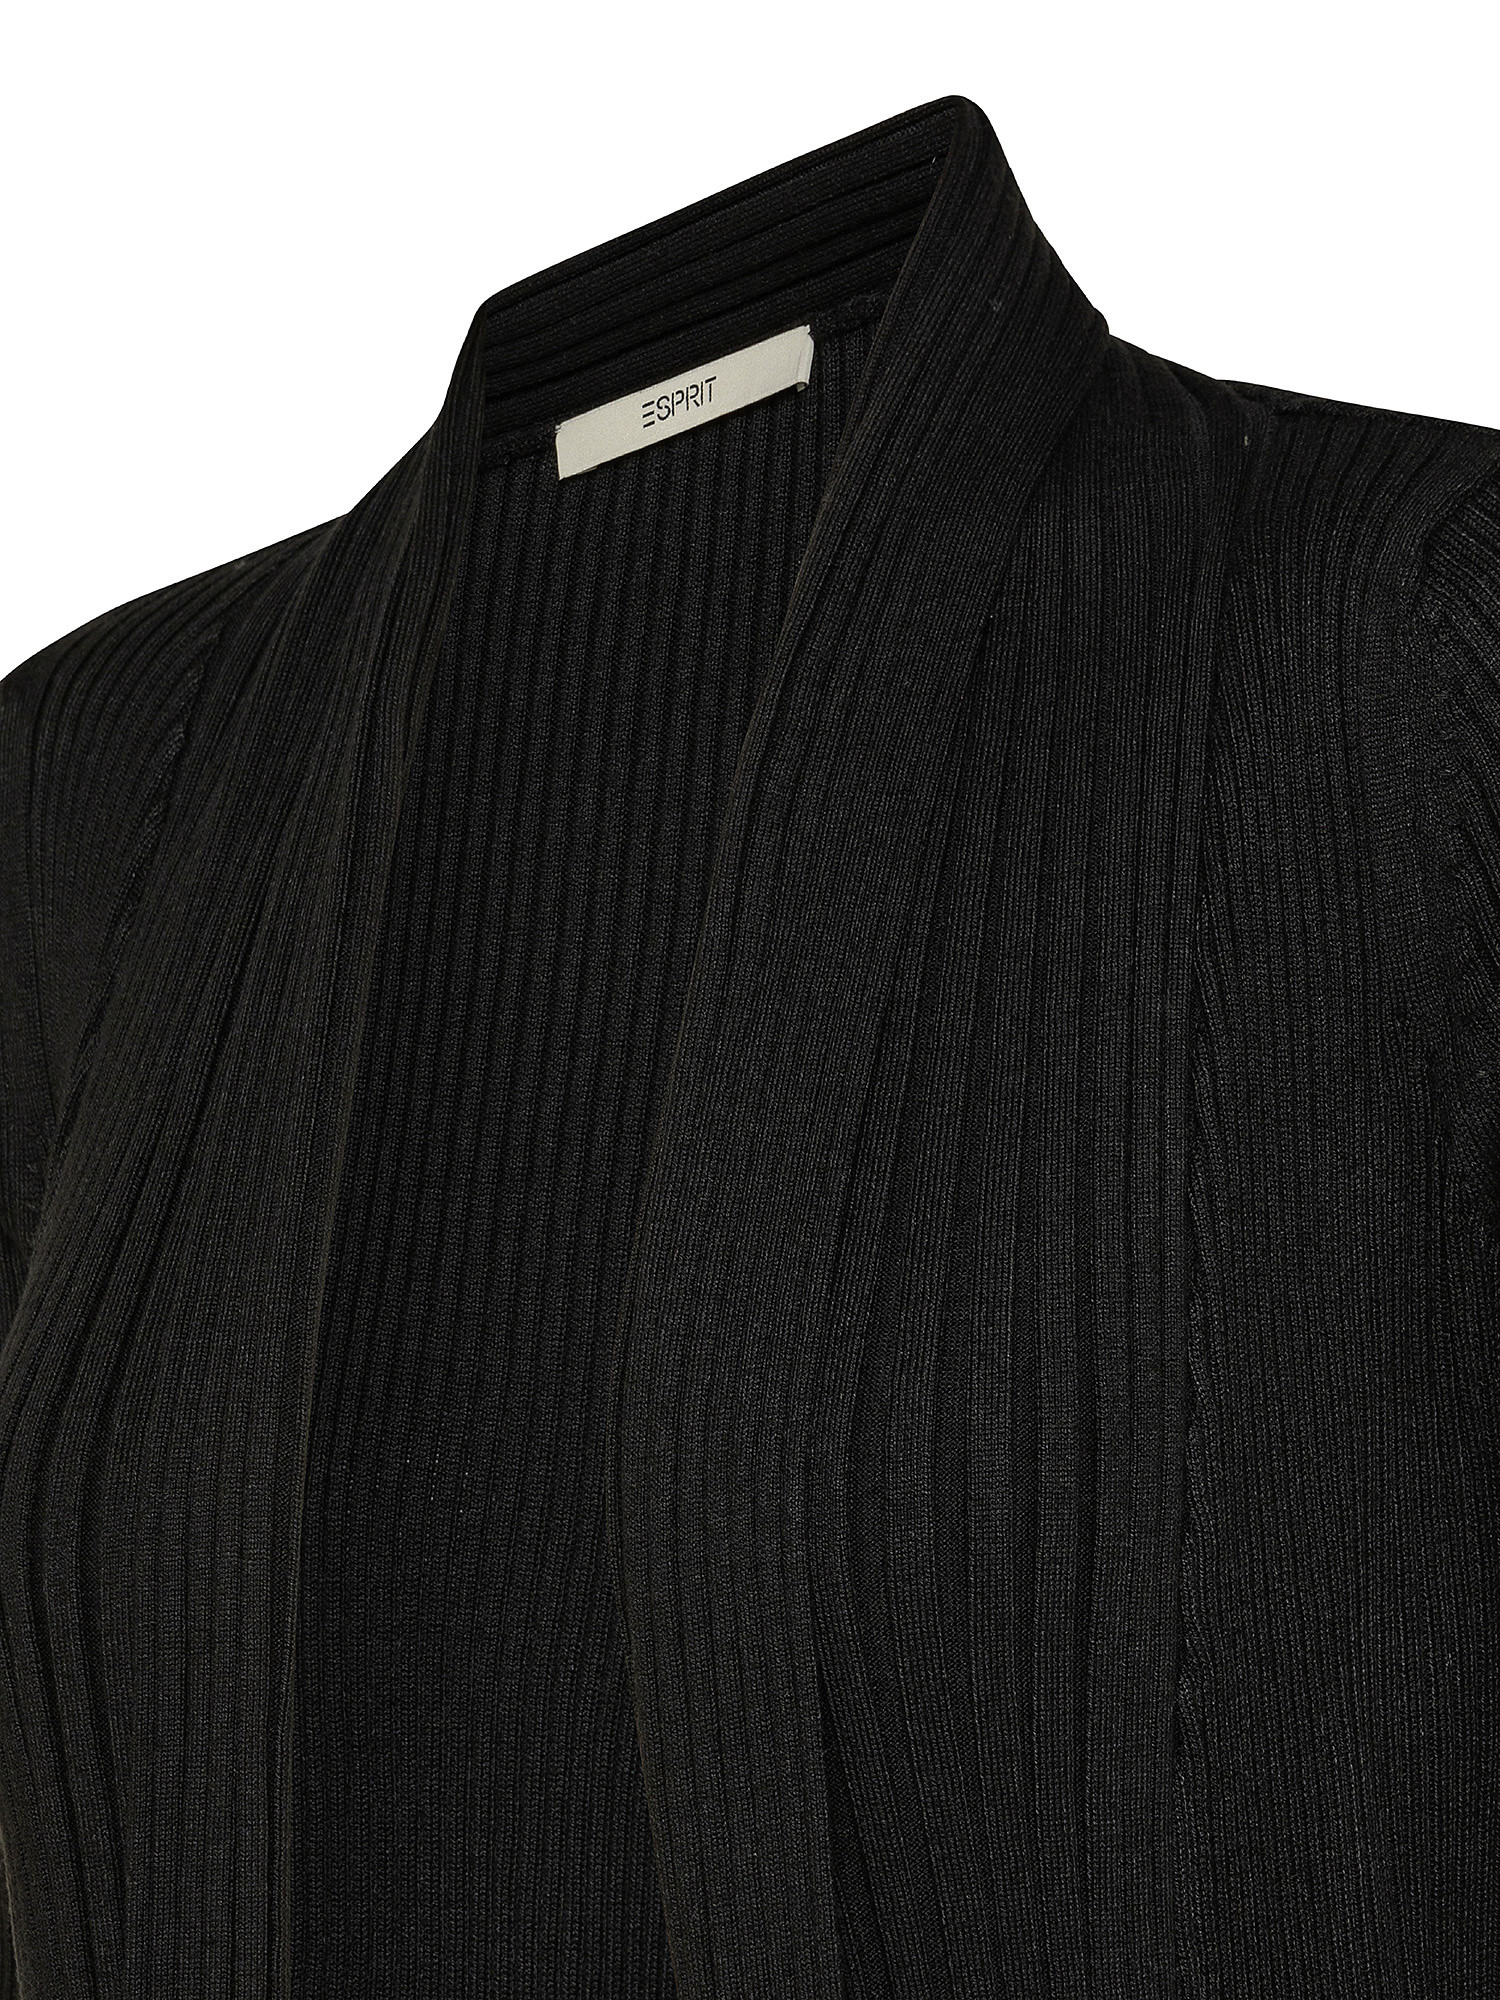 Open ribbed cardigan, Black, large image number 2